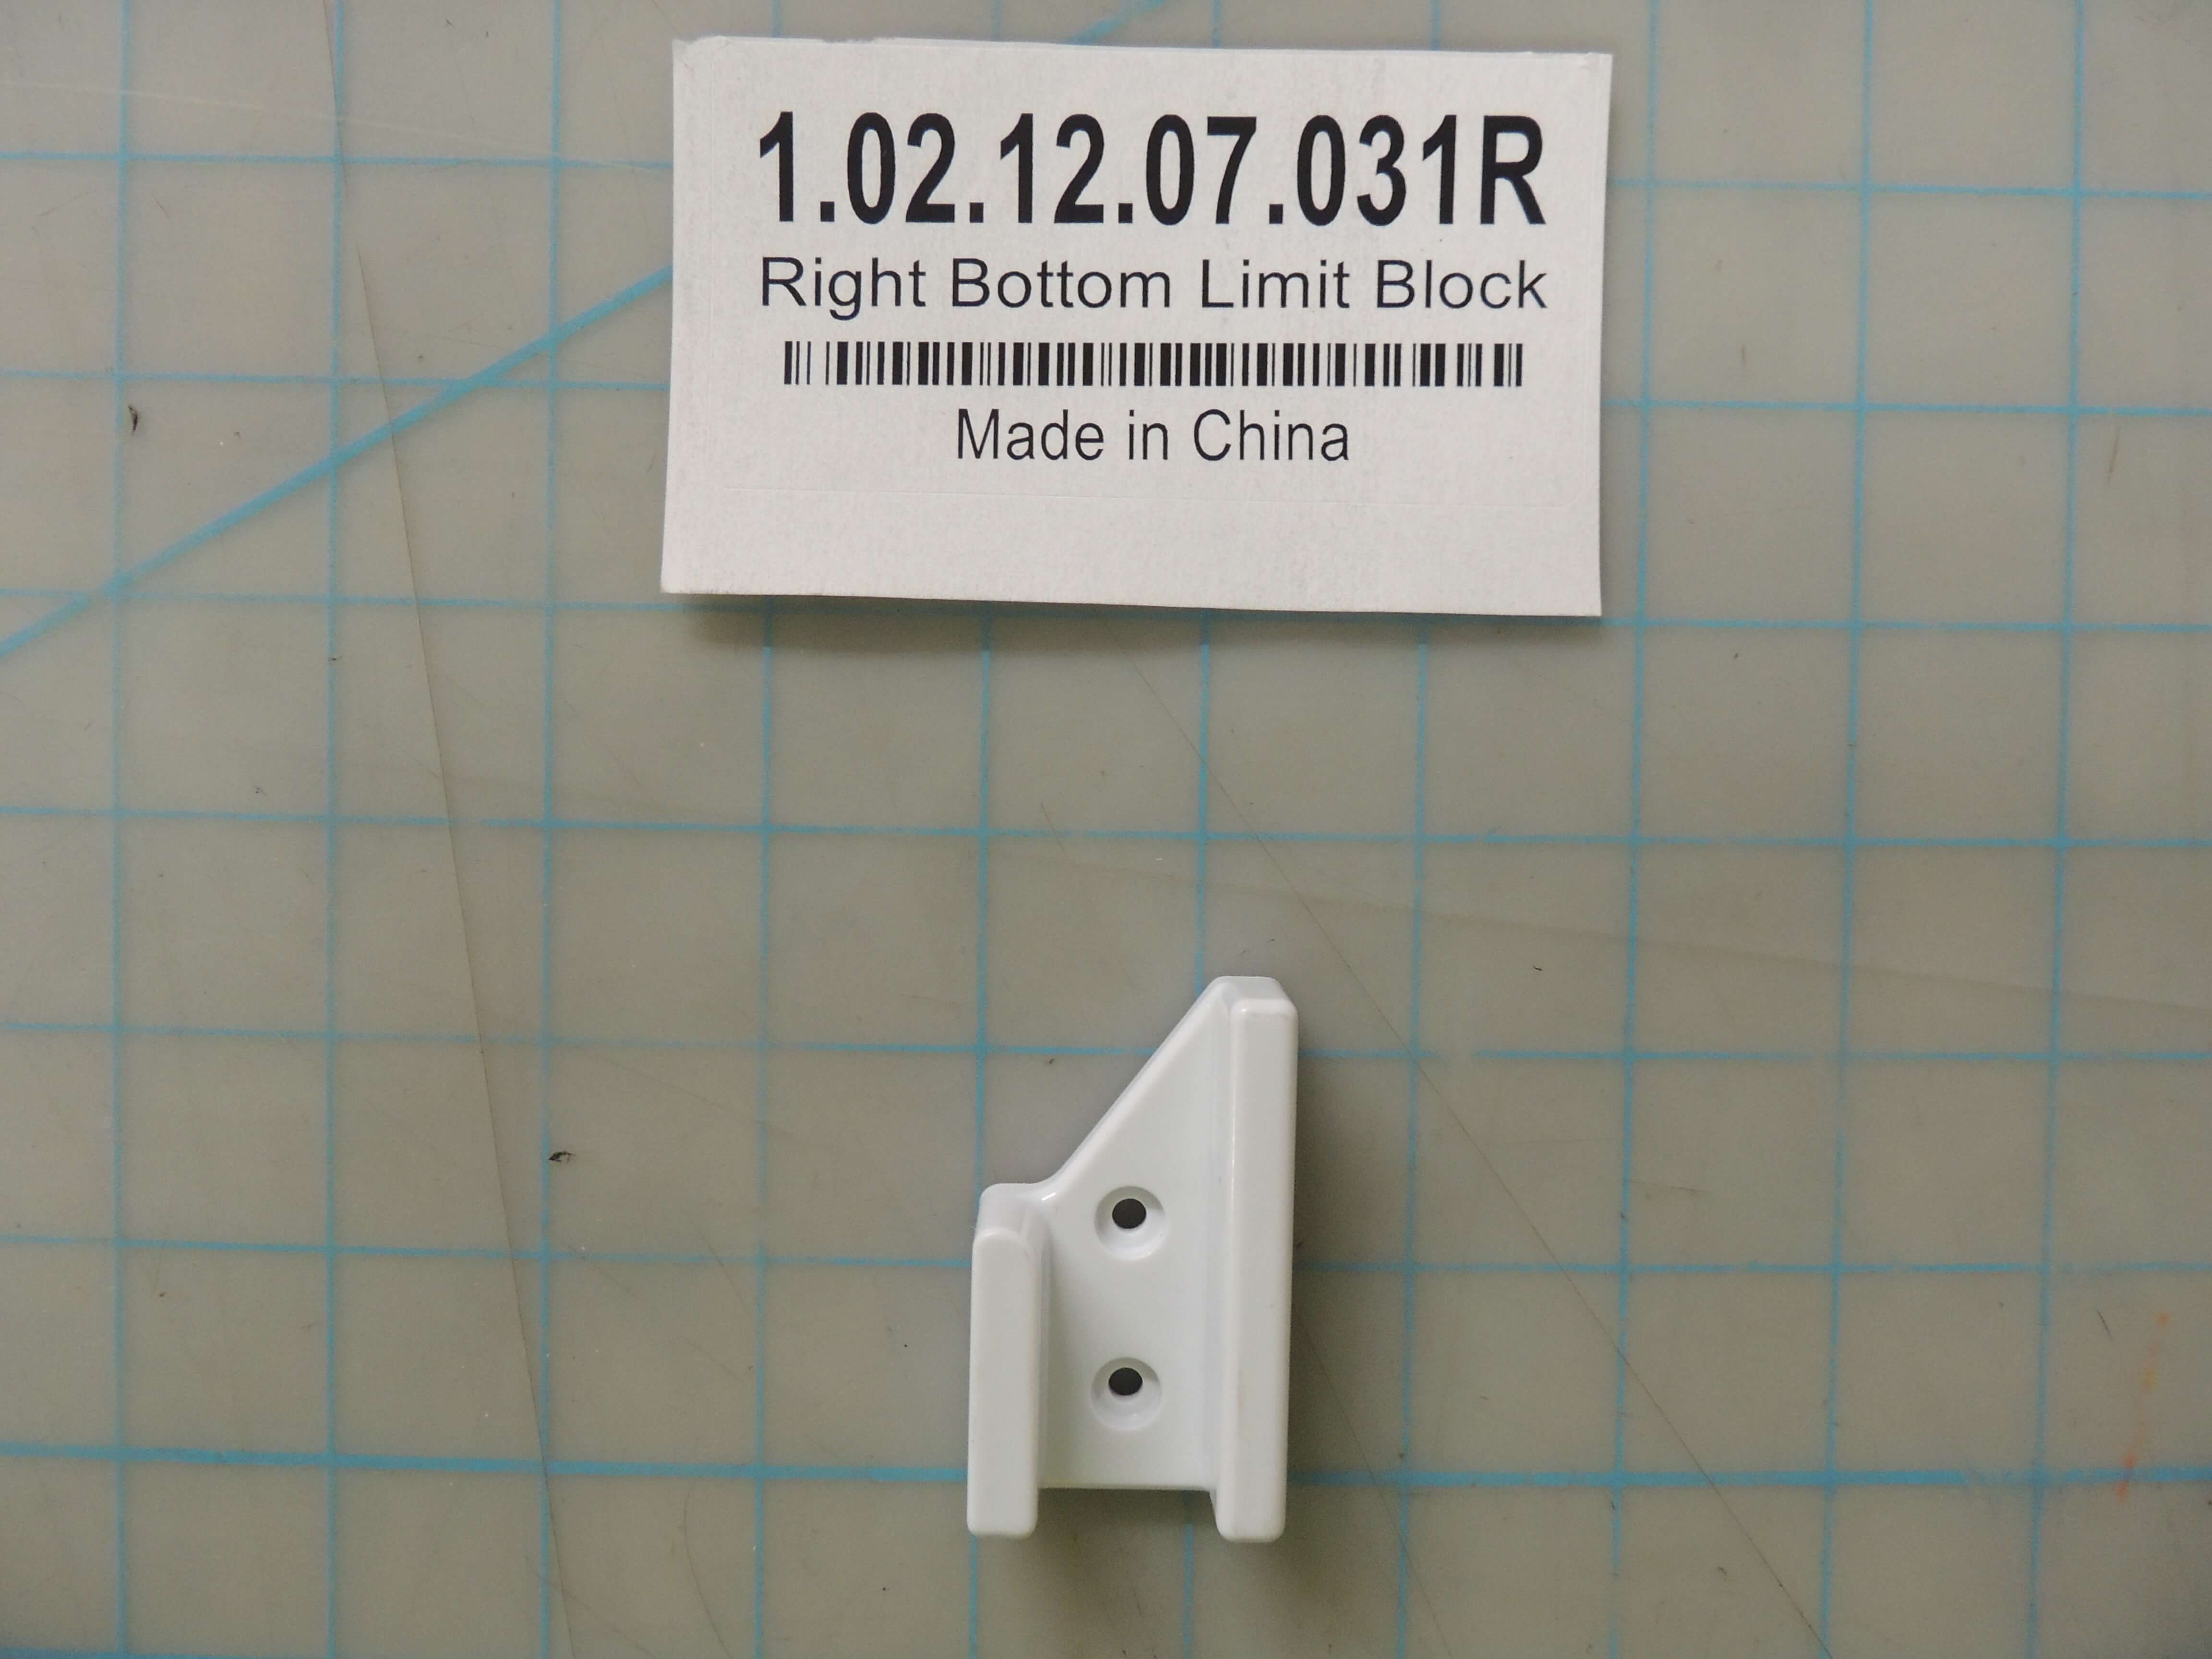 Right Bottom Limit Block